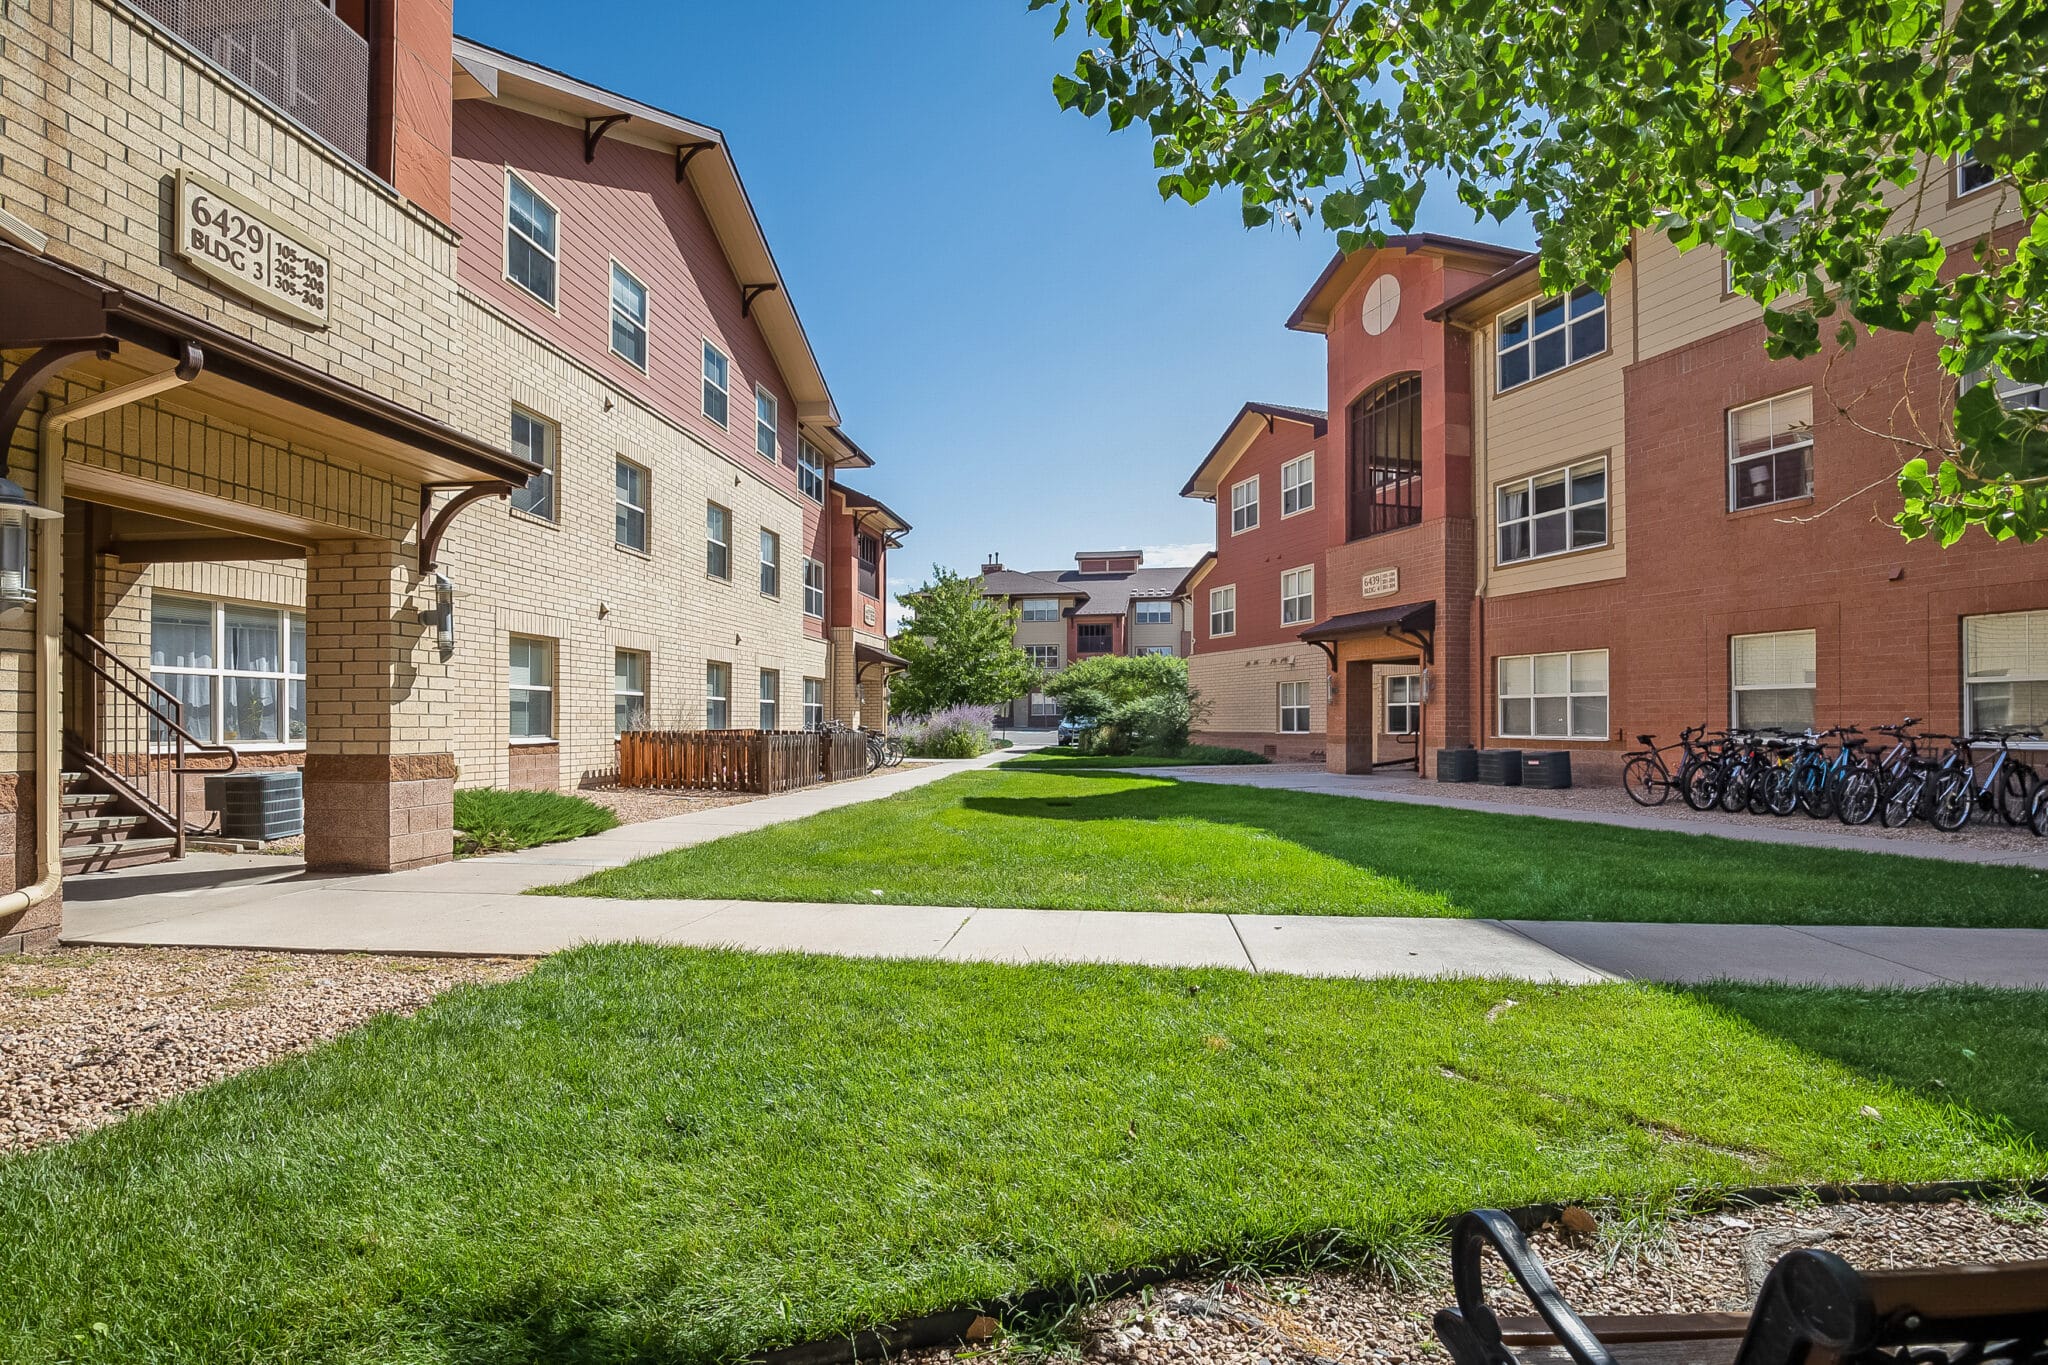 Denver Seminary sells its student housing